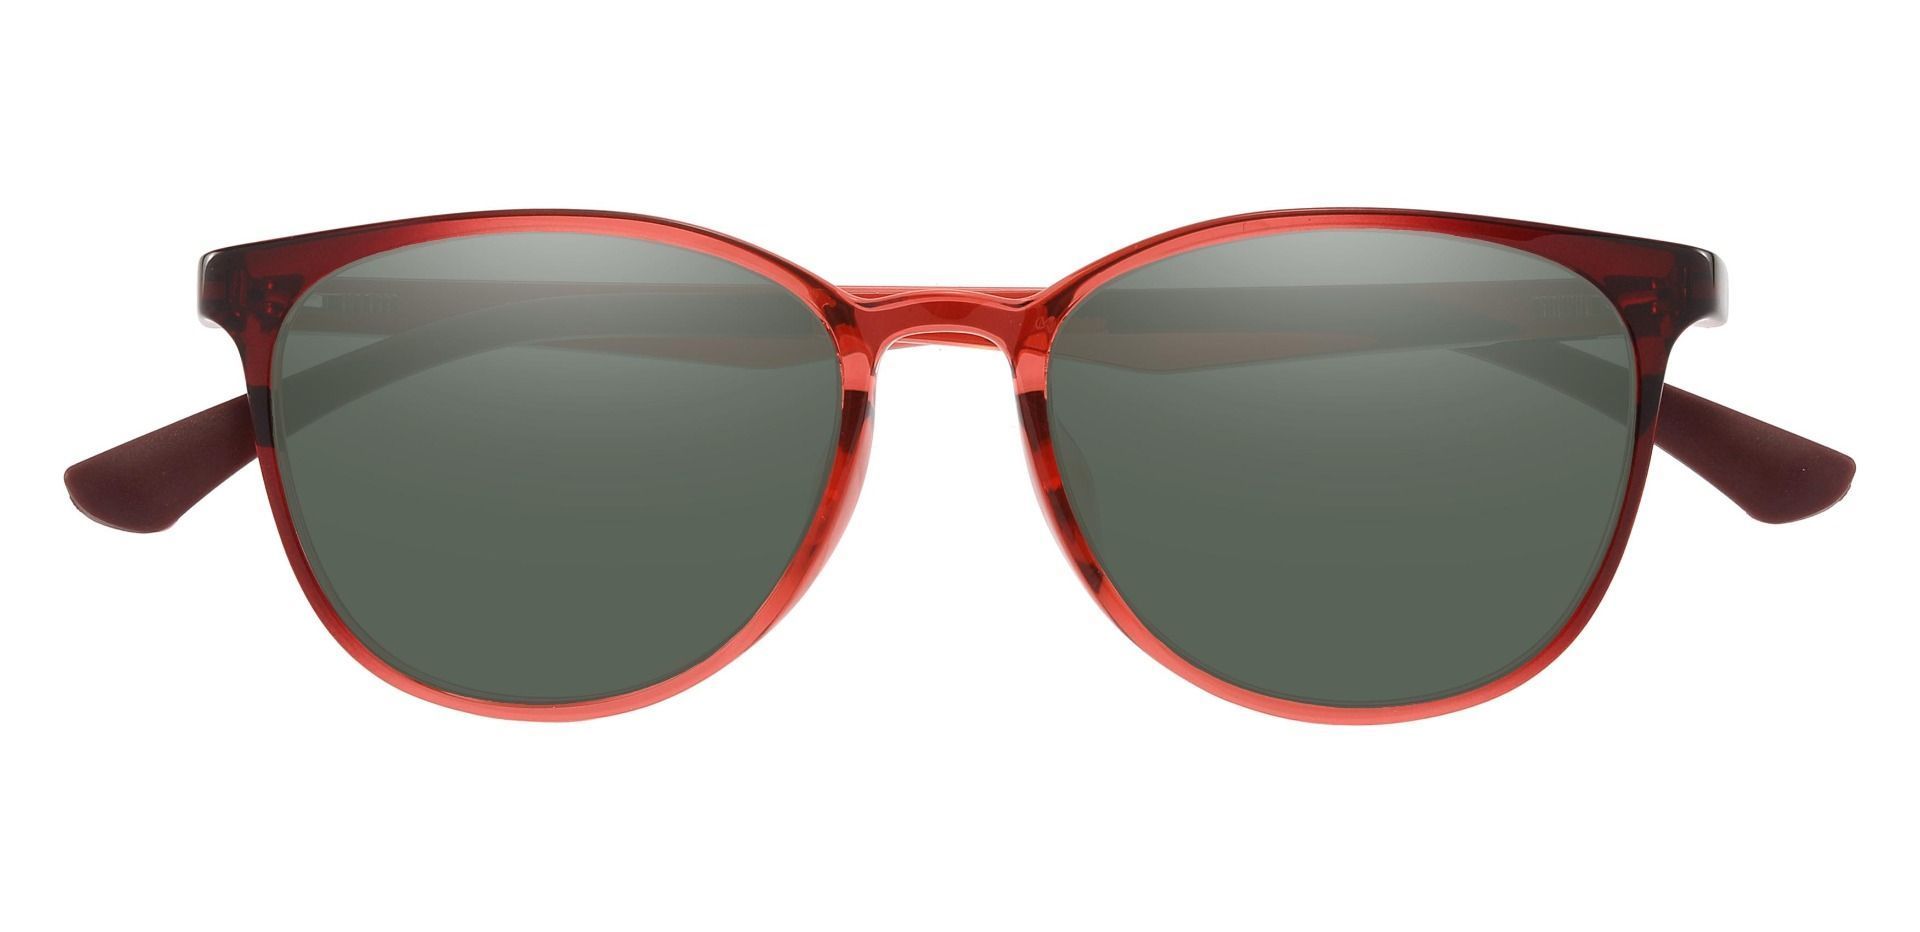 Pembroke Oval Lined Bifocal Sunglasses - Pink Frame With Green Lenses